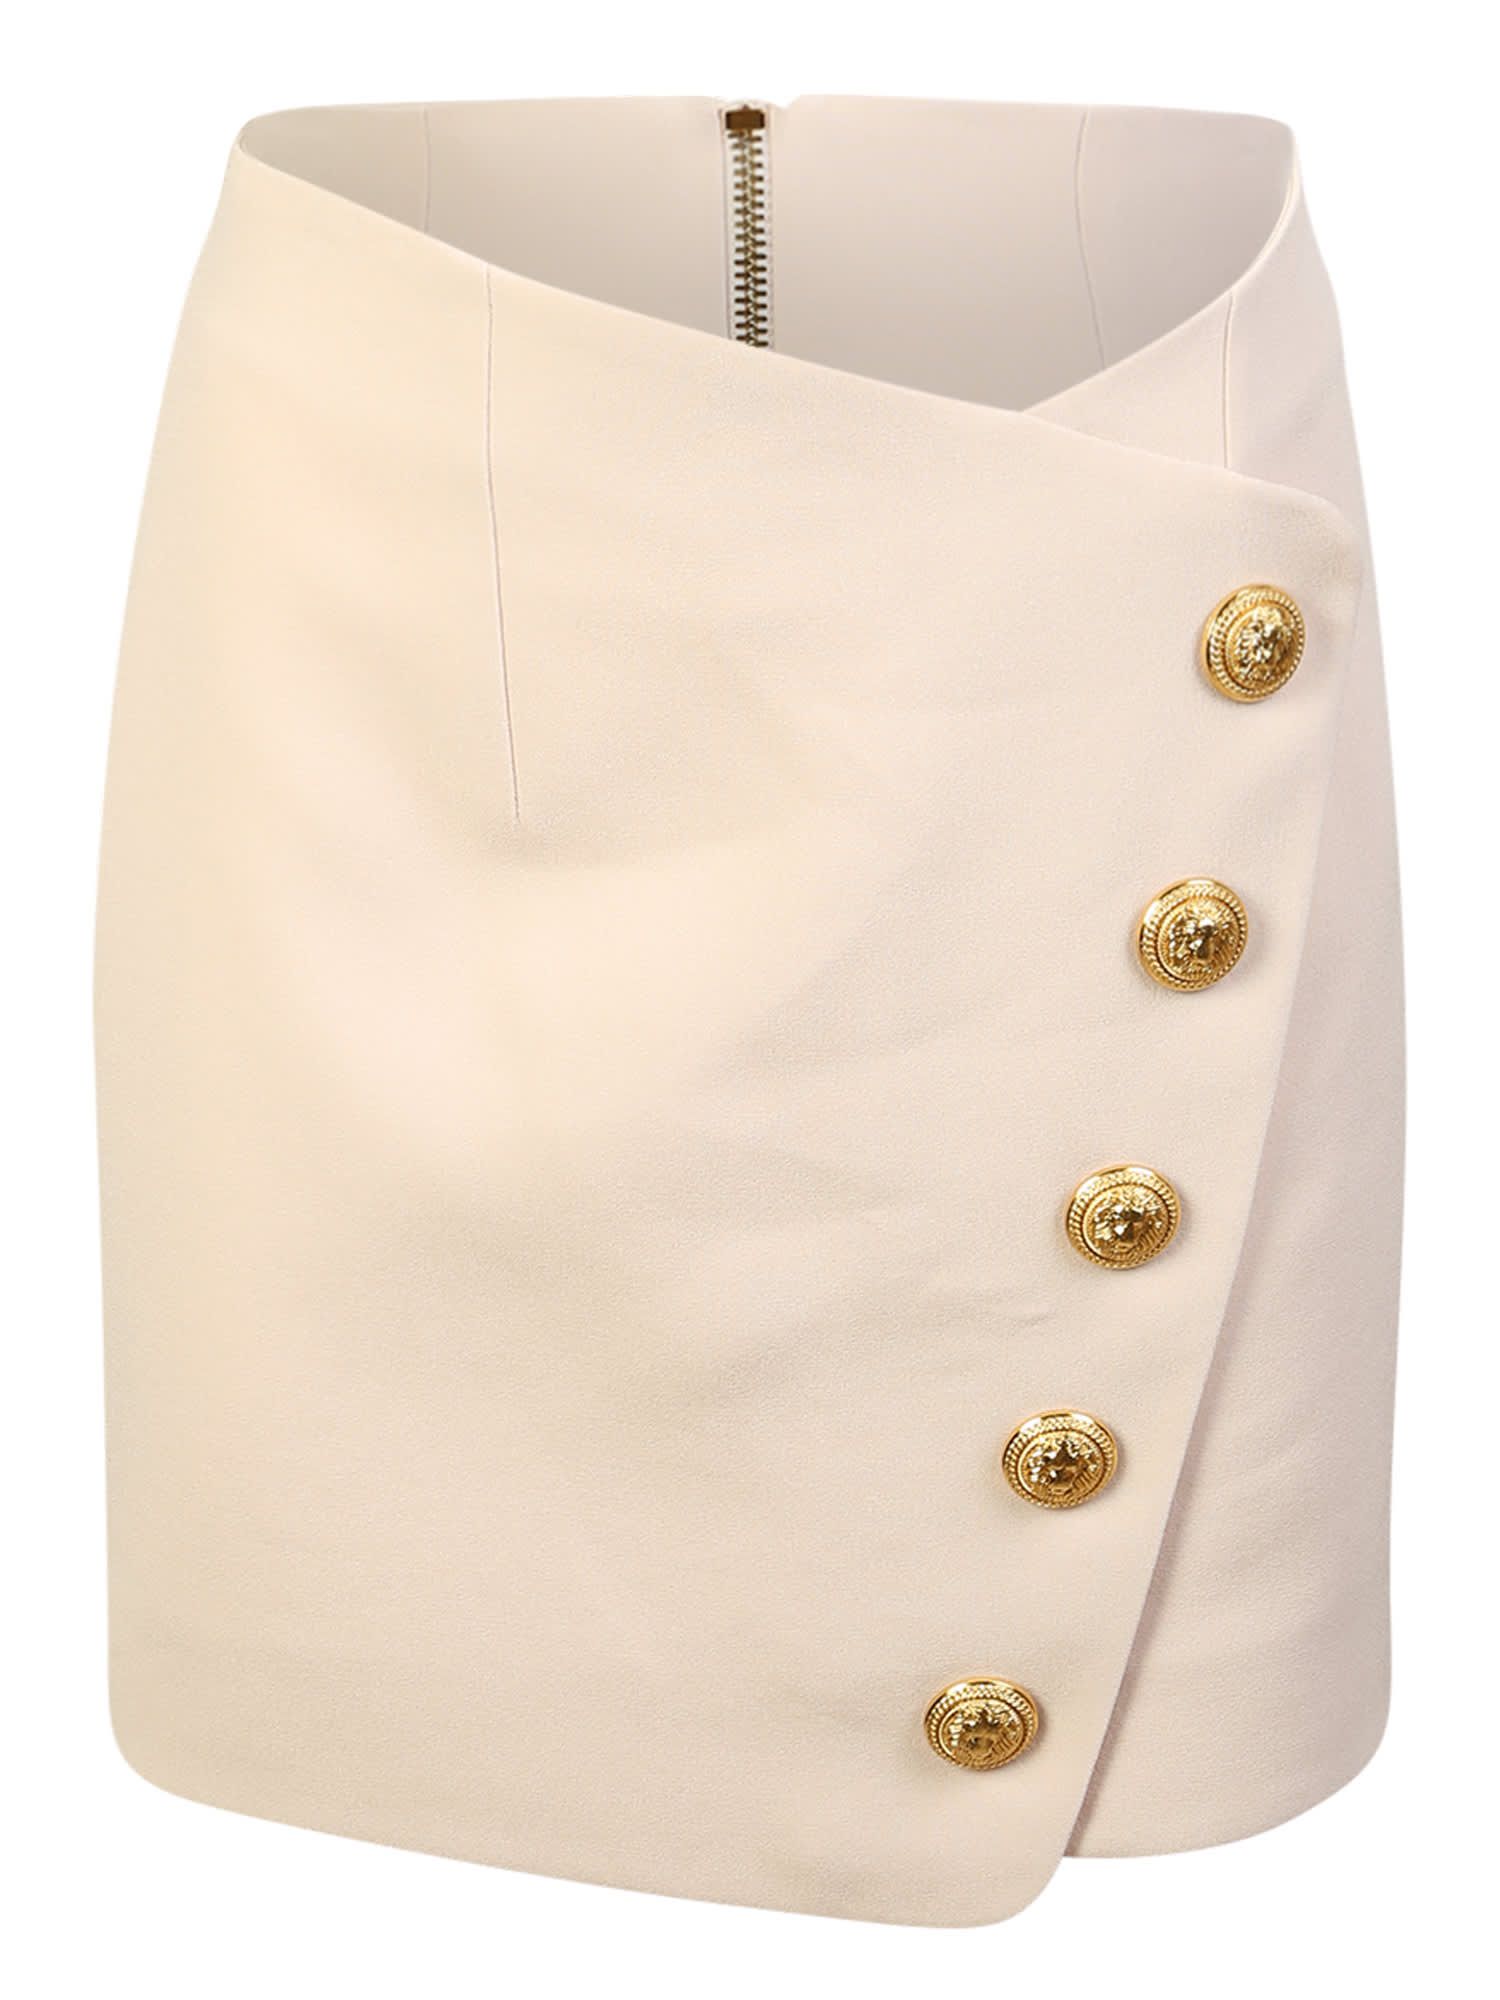 This Balmain Wrap Mini Skirt Evokes An Unmistakable Feeling Of Glamor